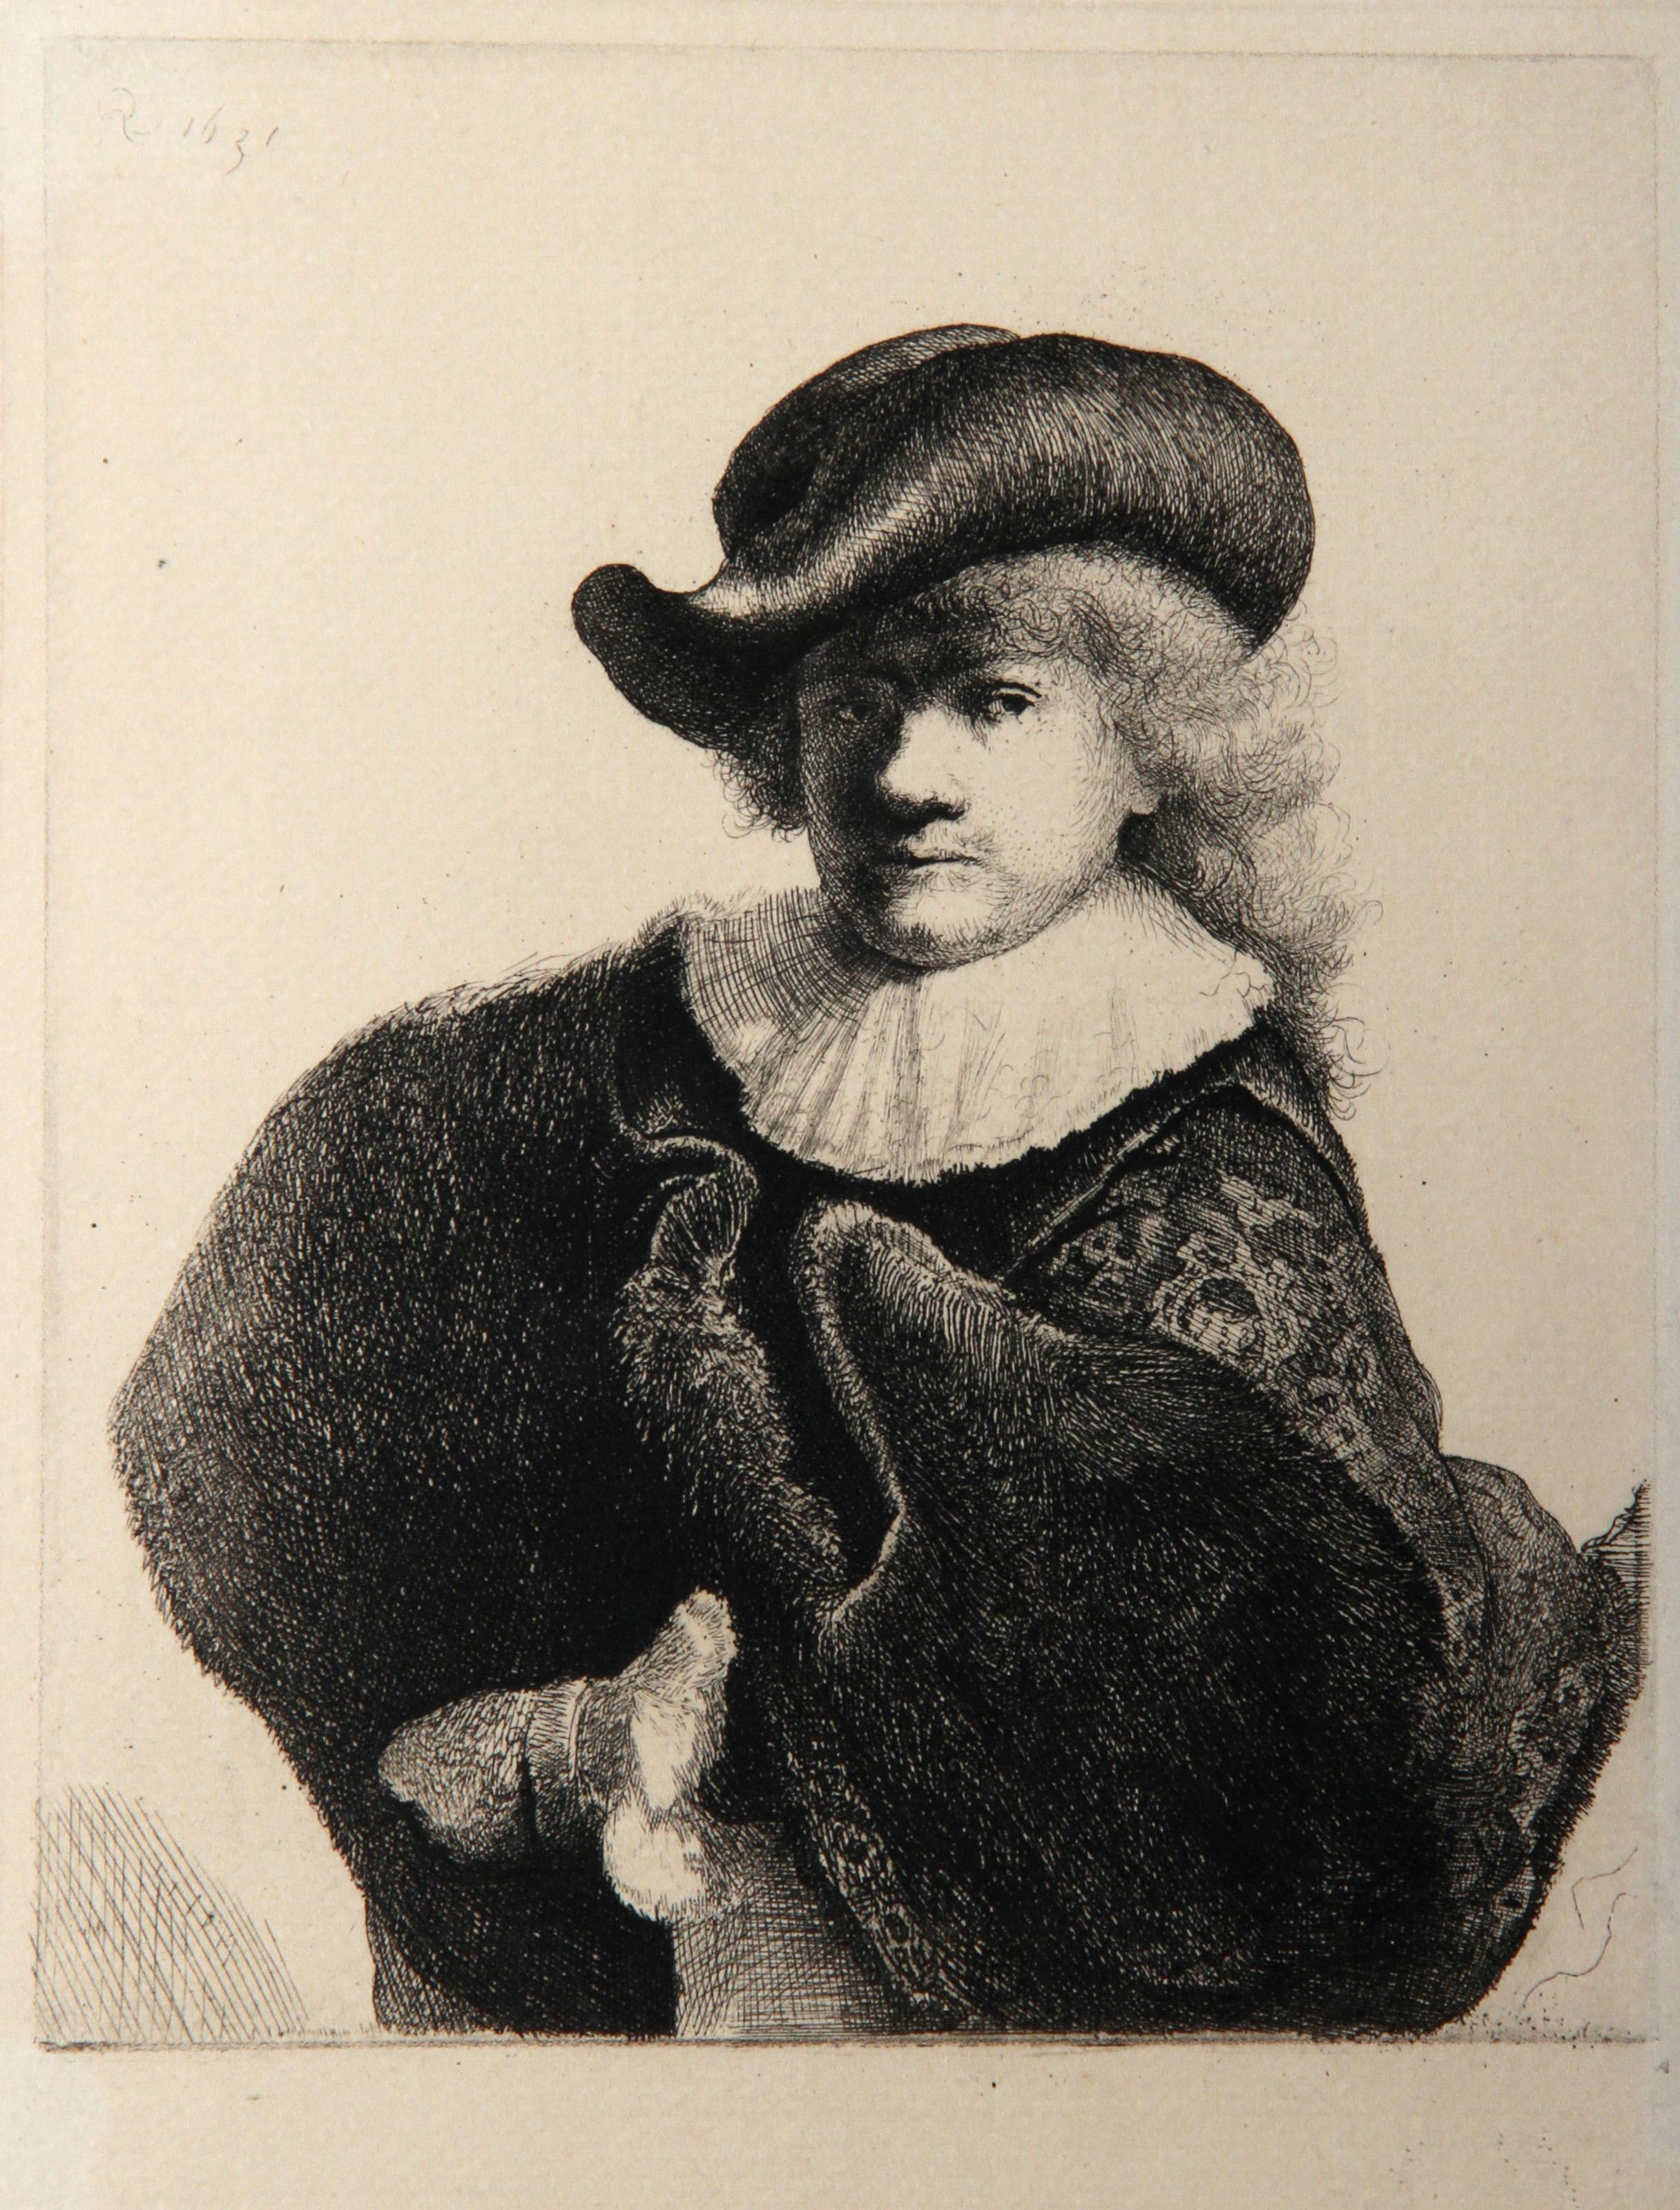 Rembrandt van Rijn, After by Amand Durand, Dutch (1606 - 1669) -  Rembrandt au Chapeau Rond  (B7). Year: 1878 (of original 1631), Medium: Heliogravure, Size: 5.75  x 5.25 in. (14.61  x 13.34 cm), Printer: Amand Durand, Description: French Engraver